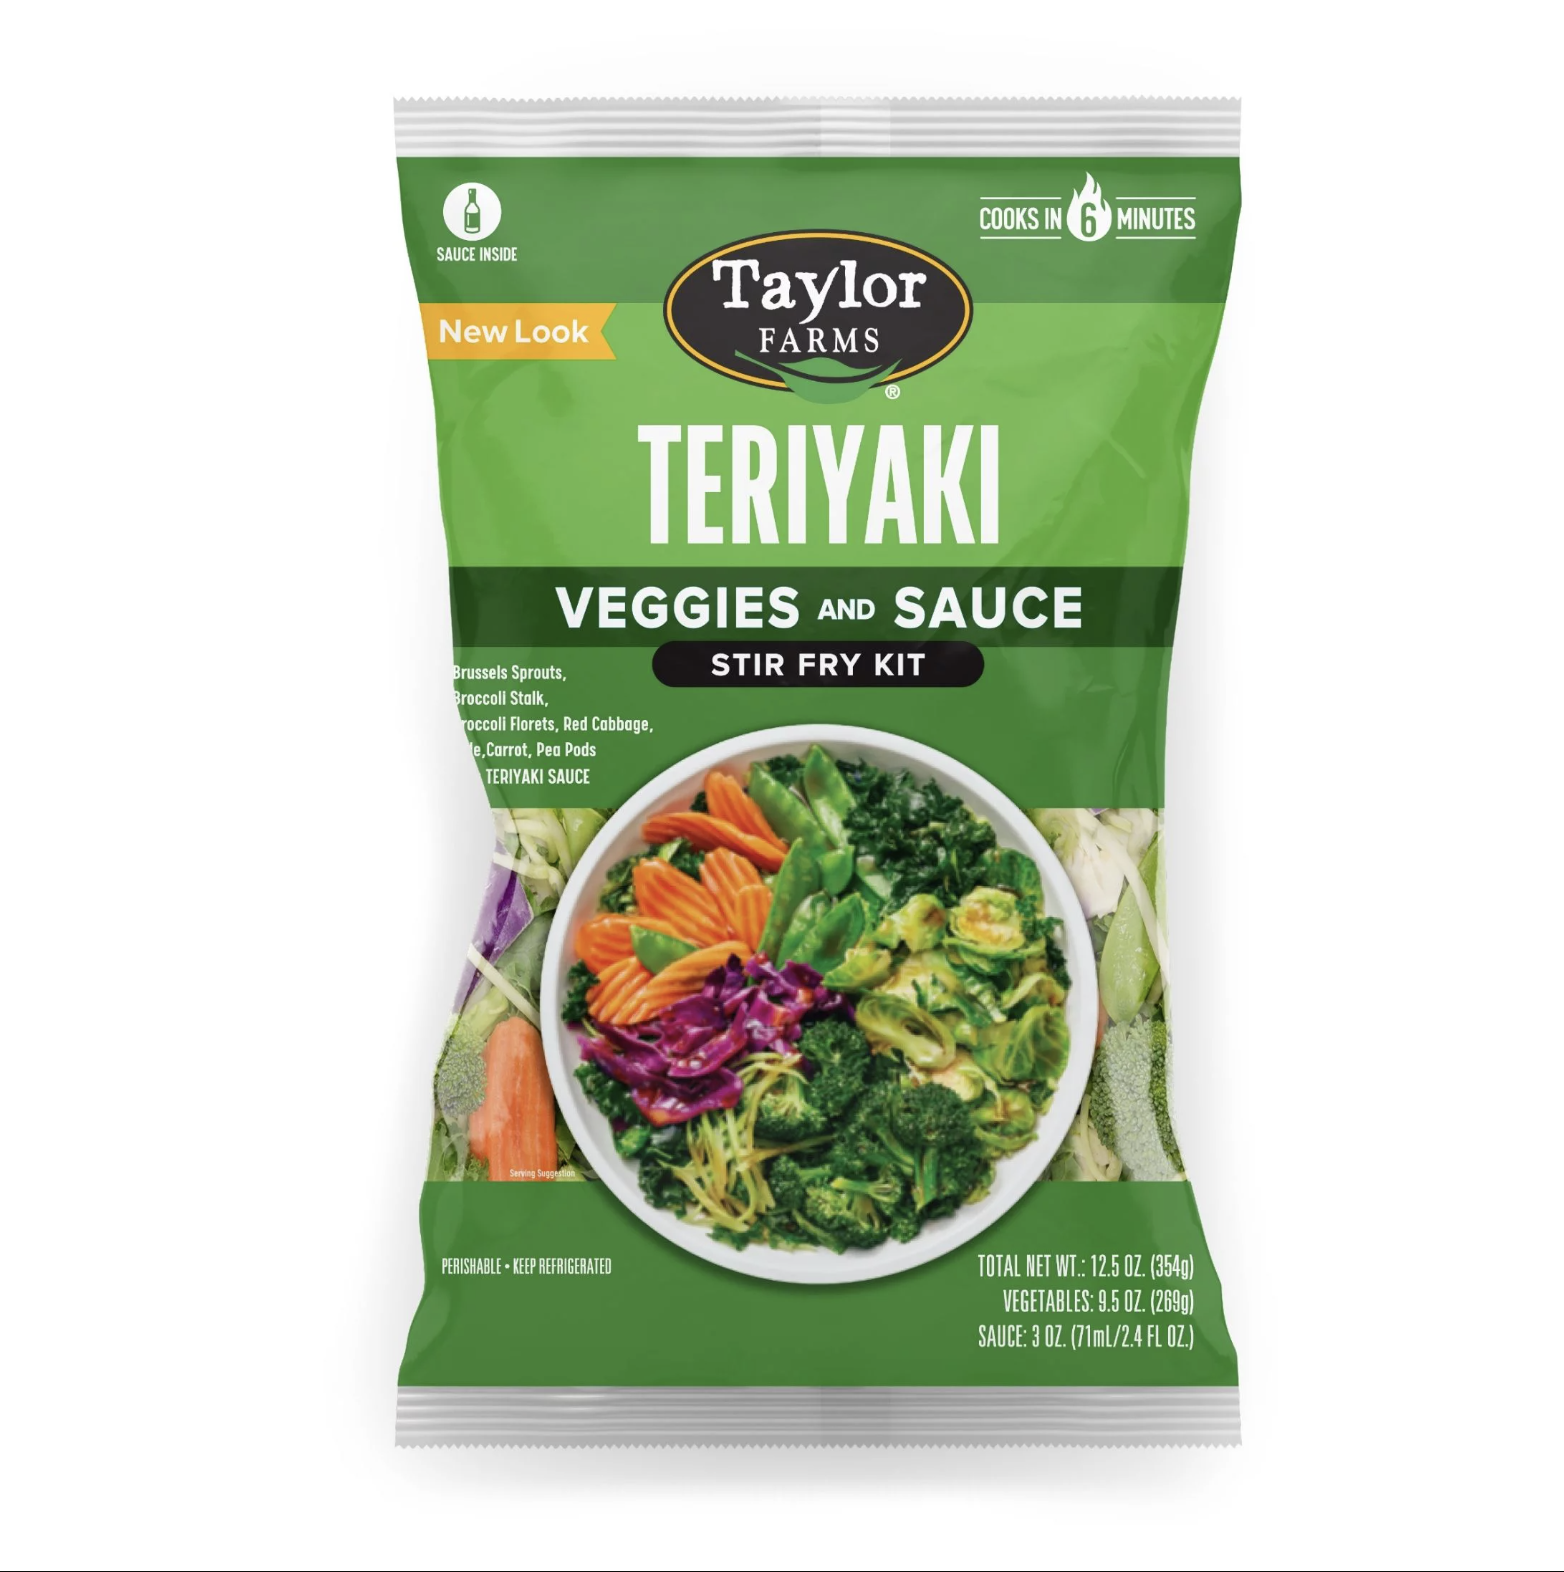 Teriyaki veggies and sauce stir fry kit